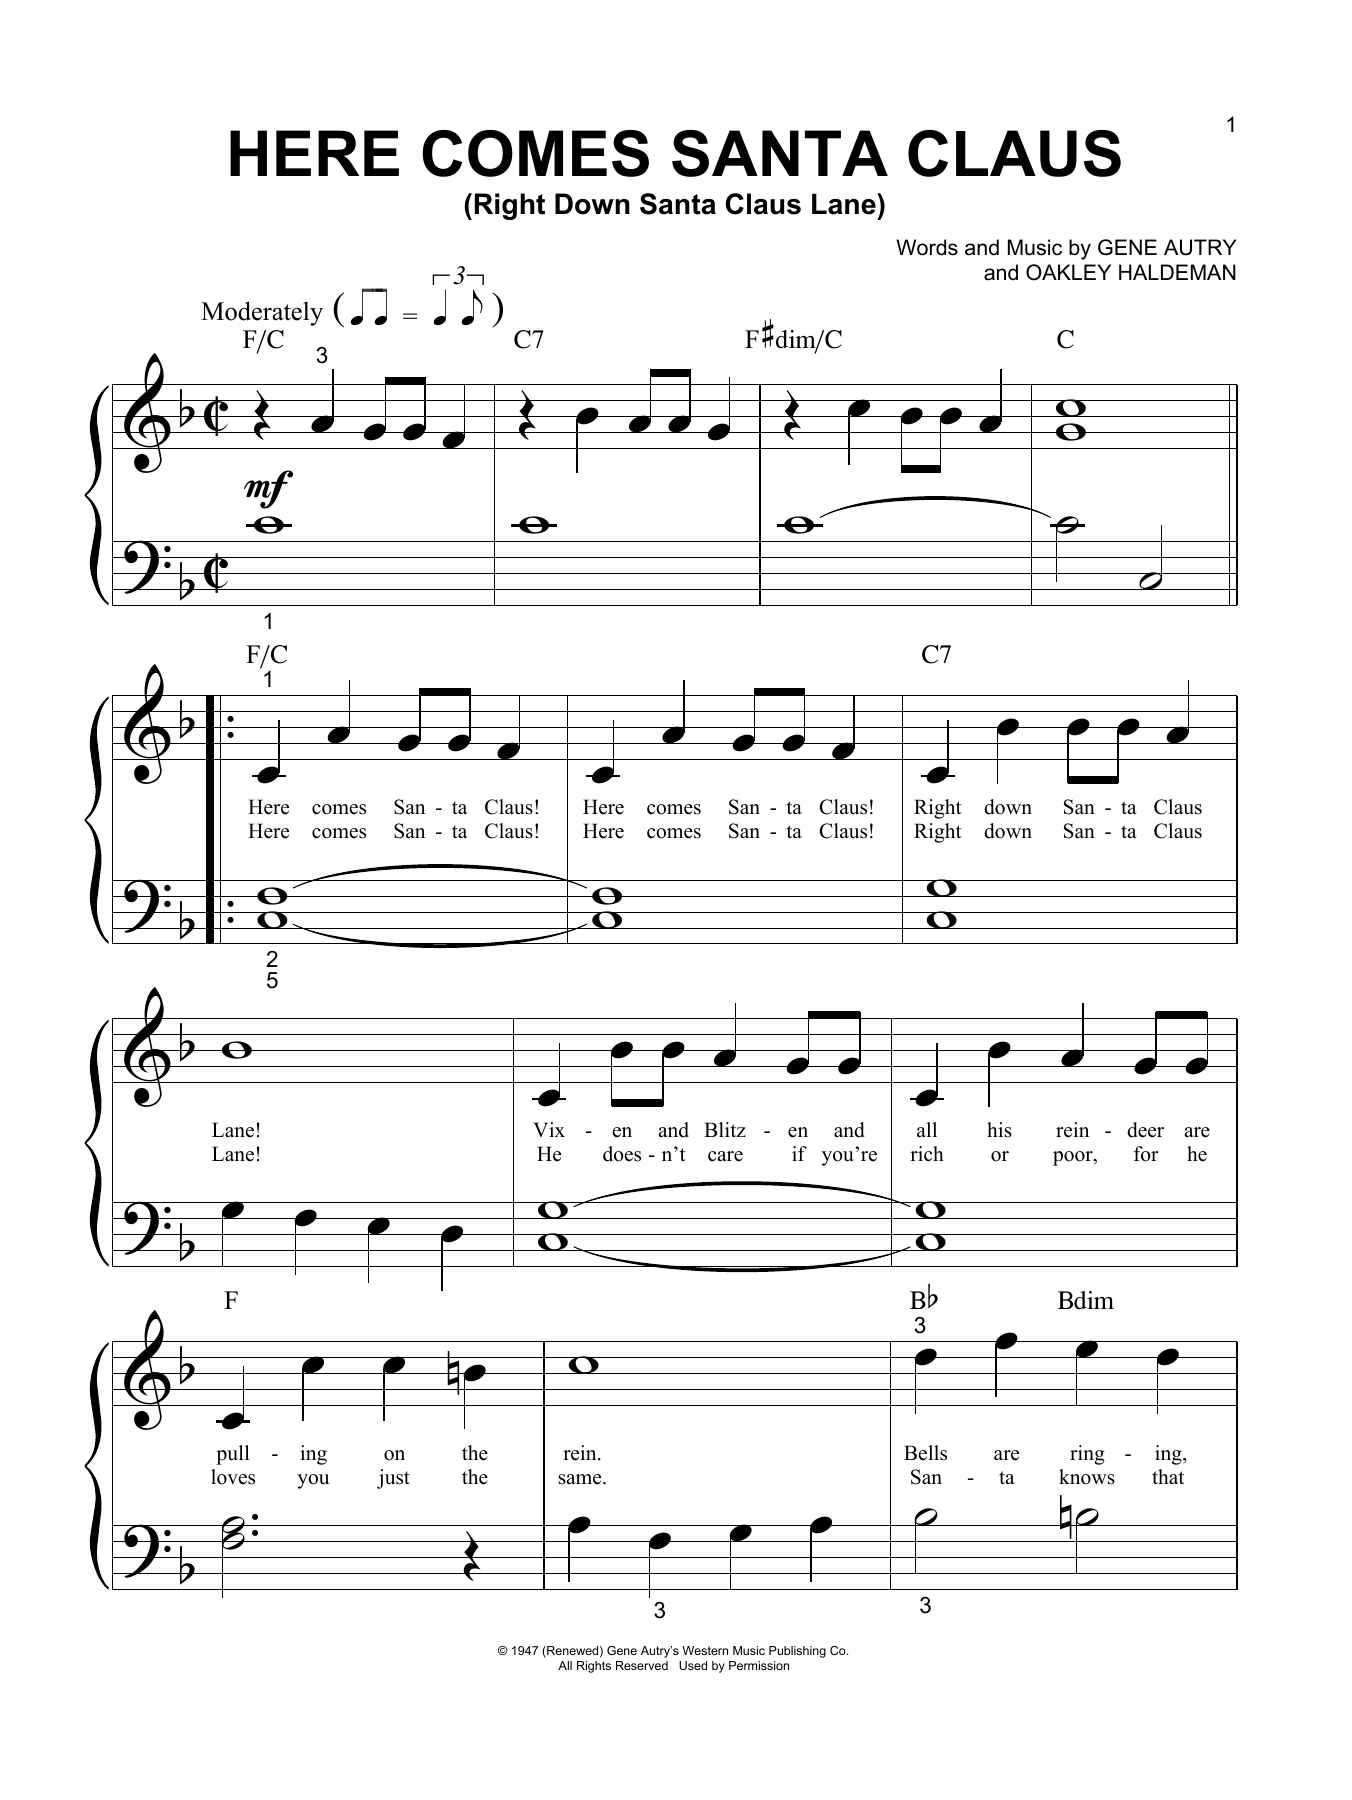 Oakley Haldeman Here Comes Santa Claus (Right Down Santa Claus Lane) Sheet Music Notes & Chords for Piano (Big Notes) - Download or Print PDF